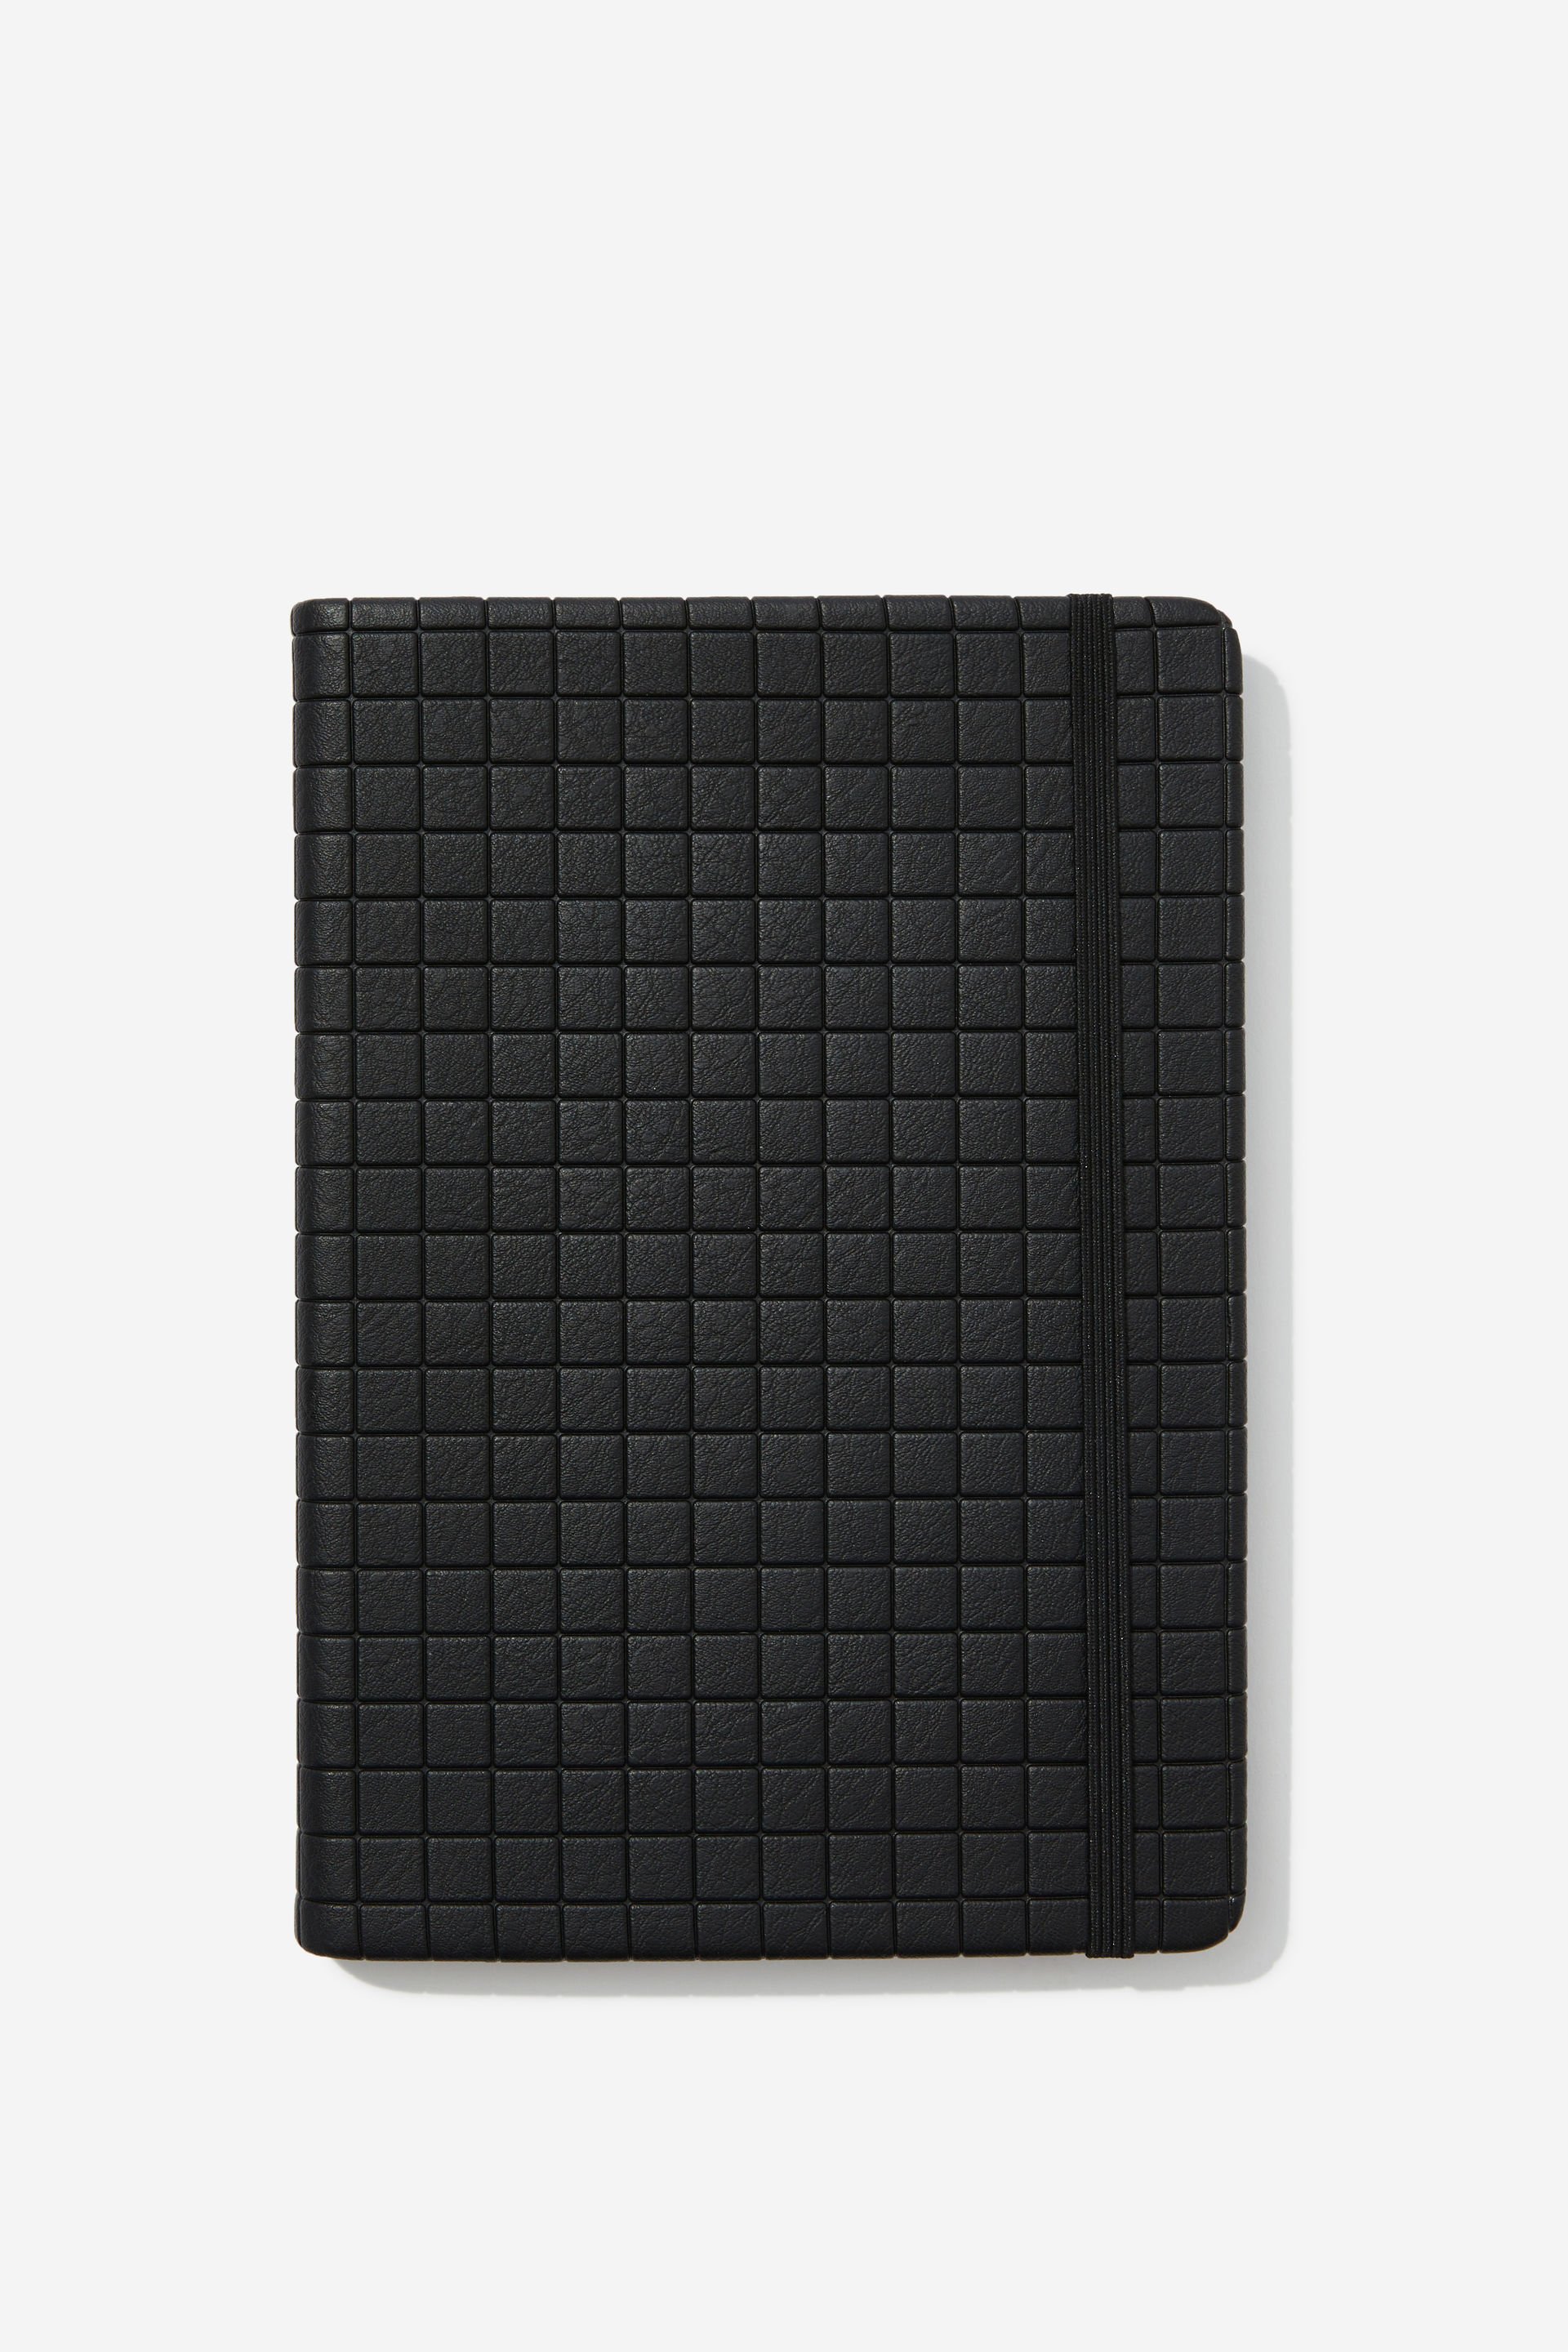 Typo - A5 Premium Buffalo Journal - Grid black debossed